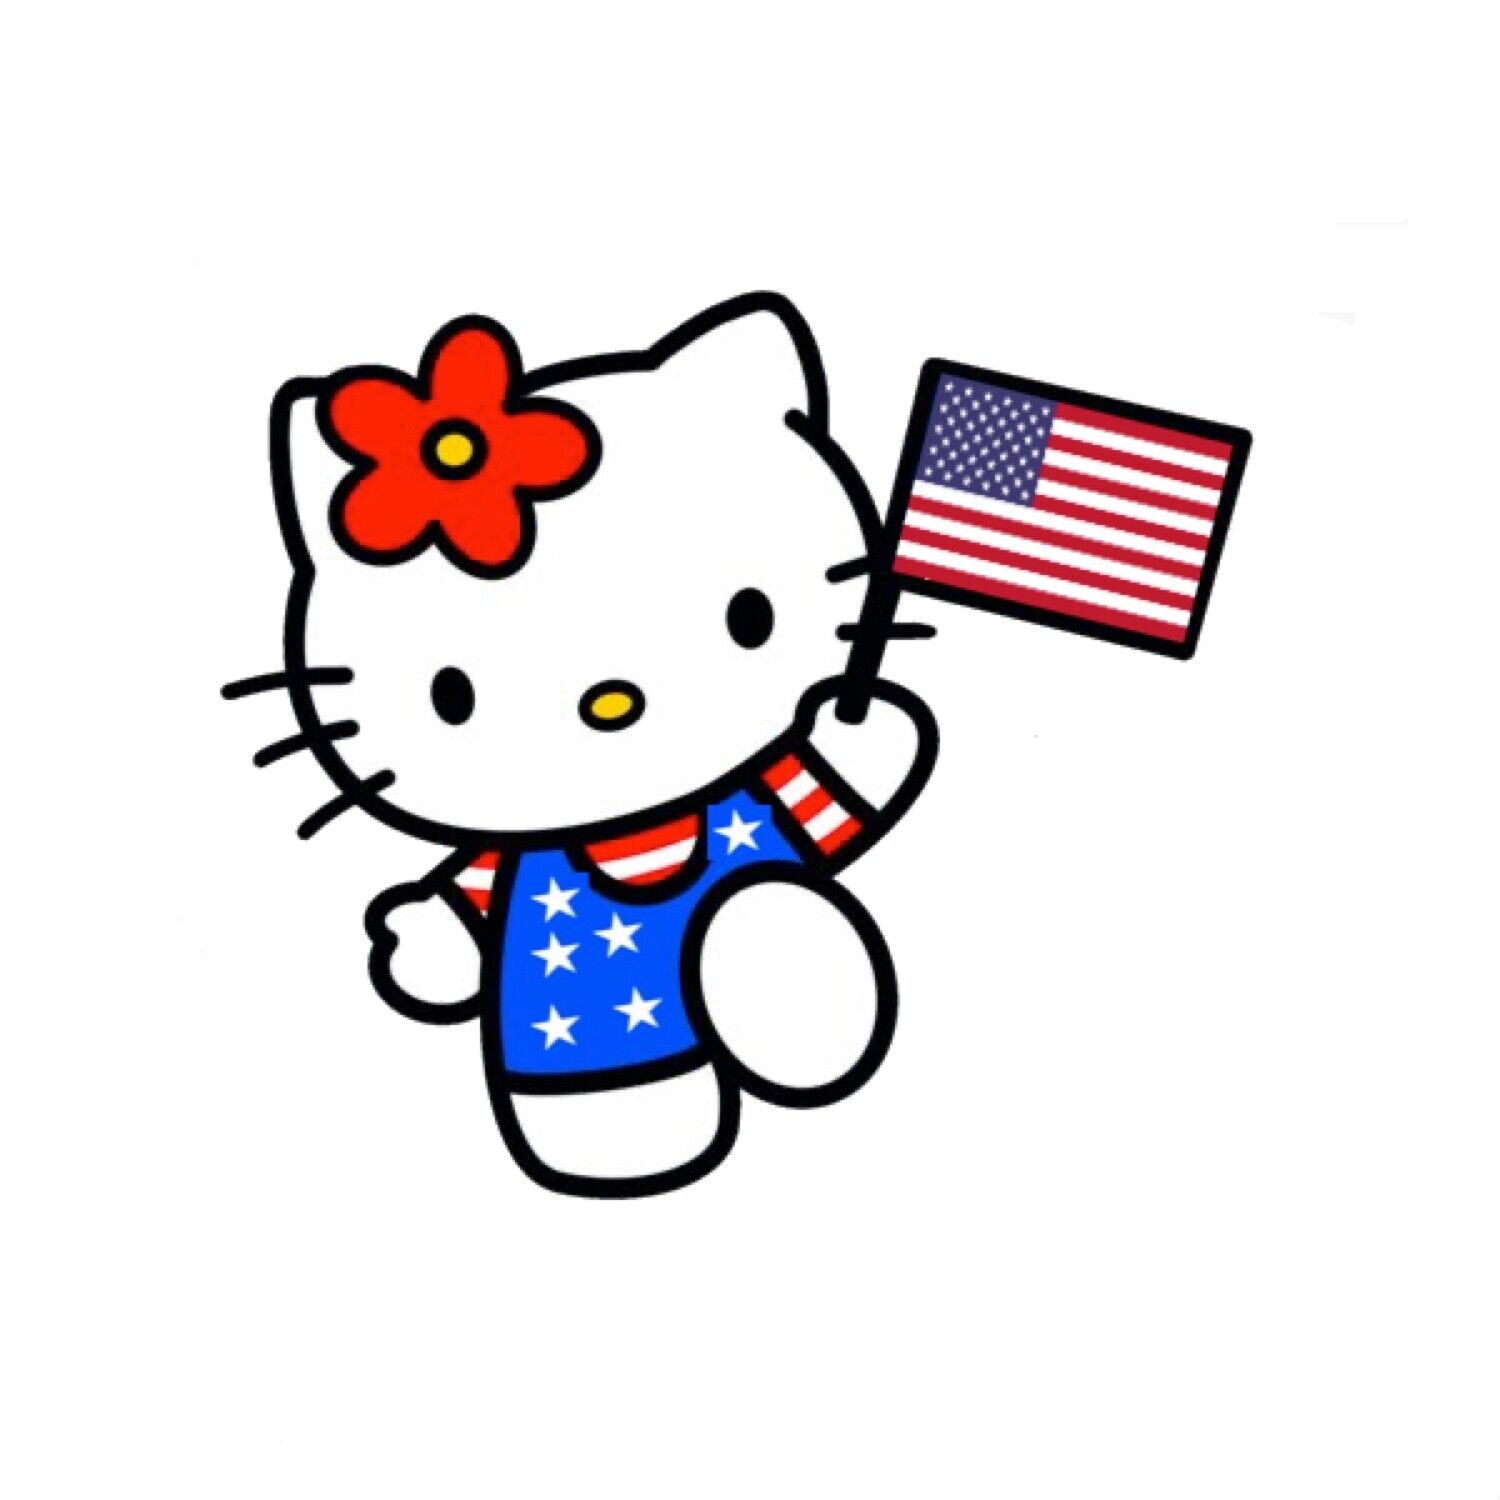 USA FLAG-HELLO KITTY-  STICKER DECAL,AMERICAN HELLO KITTY